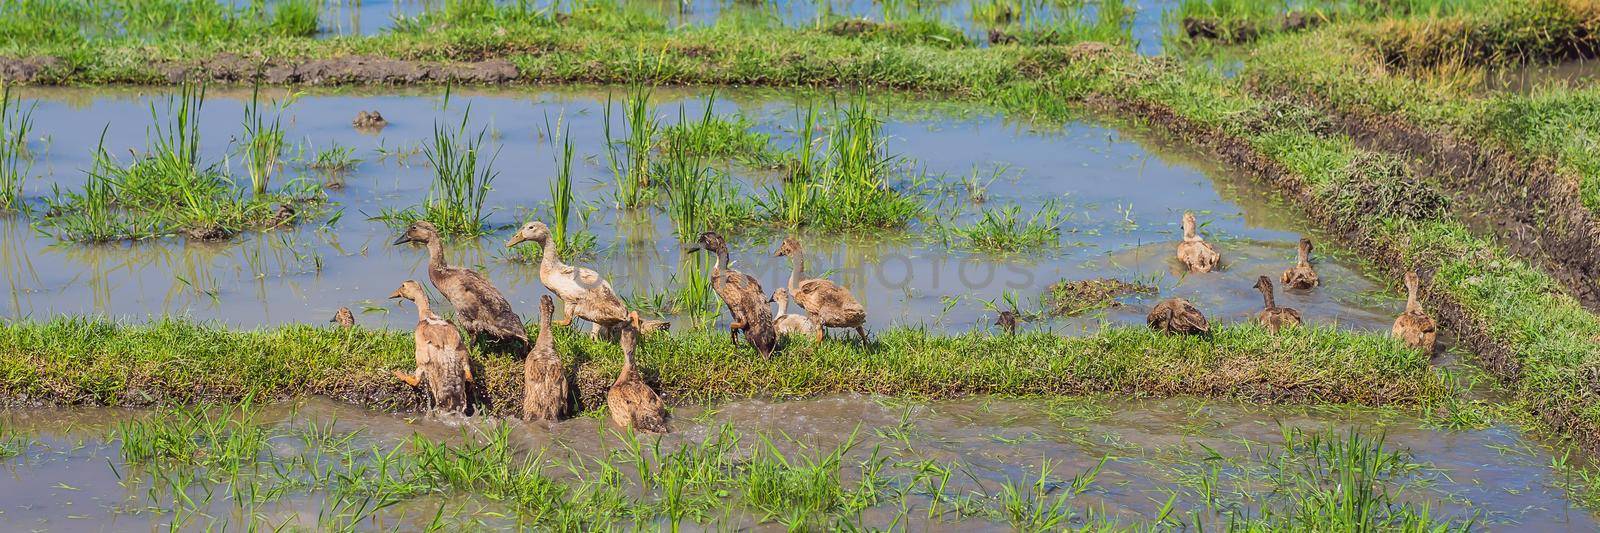 Ducks on a rice field, rural landscape, Bali Island, Indonesia BANNER, LONG FORMAT by galitskaya